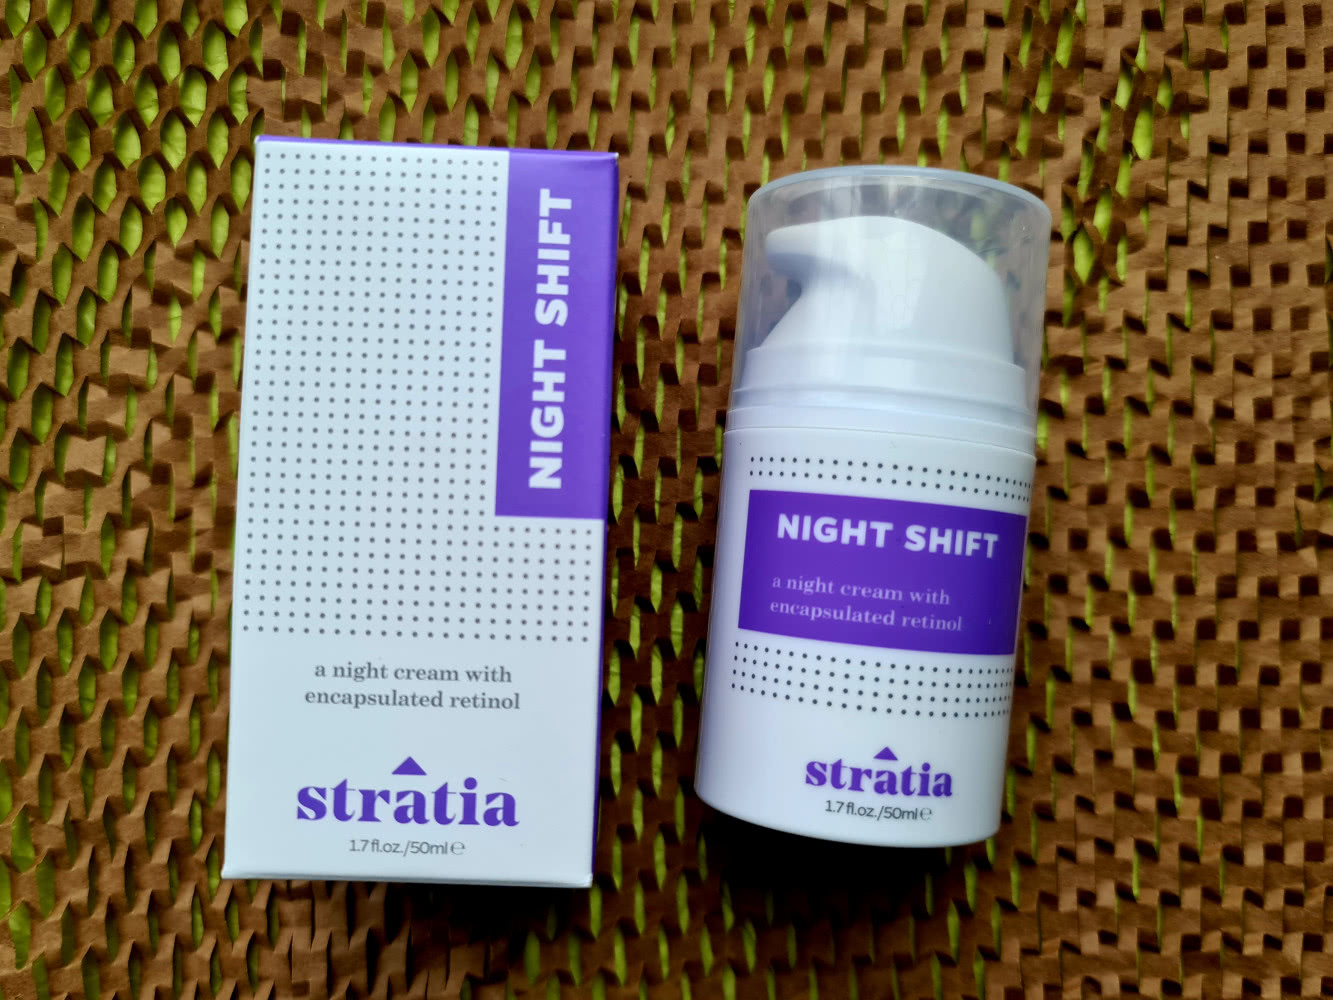 Stratia Night Shift retinol